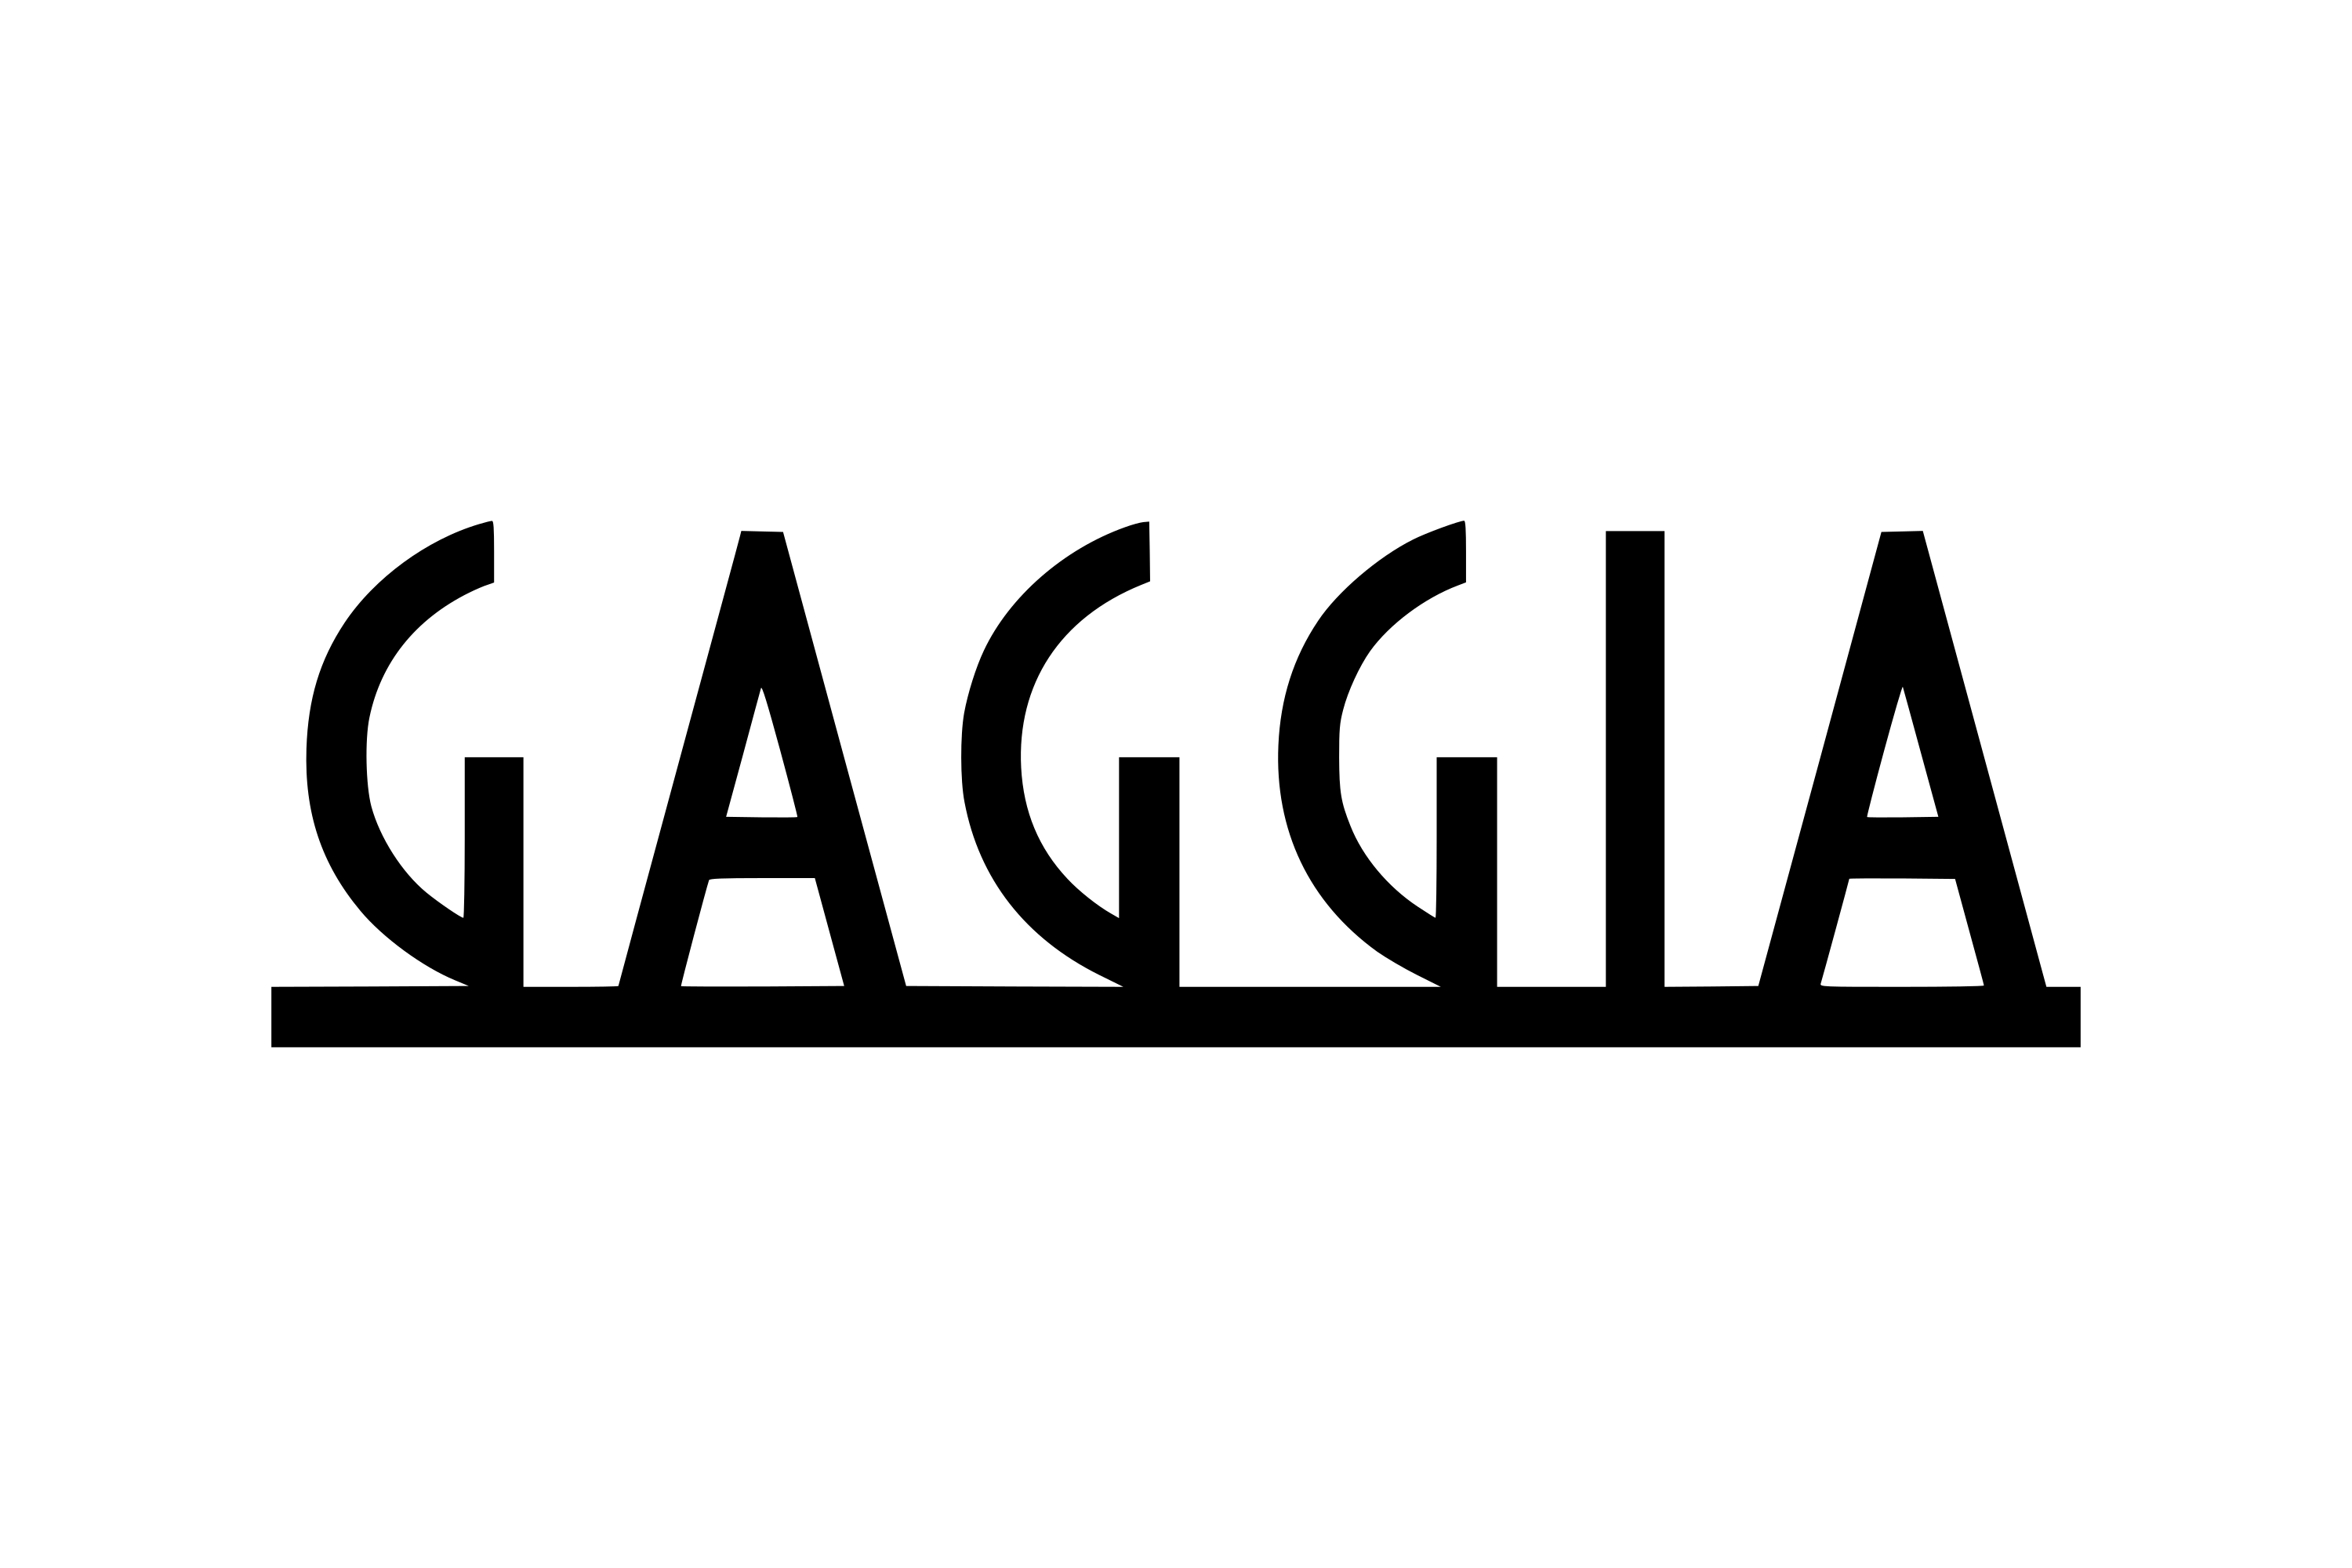 Download Download Gaggia Logo in SVG Vector or PNG File Format ...